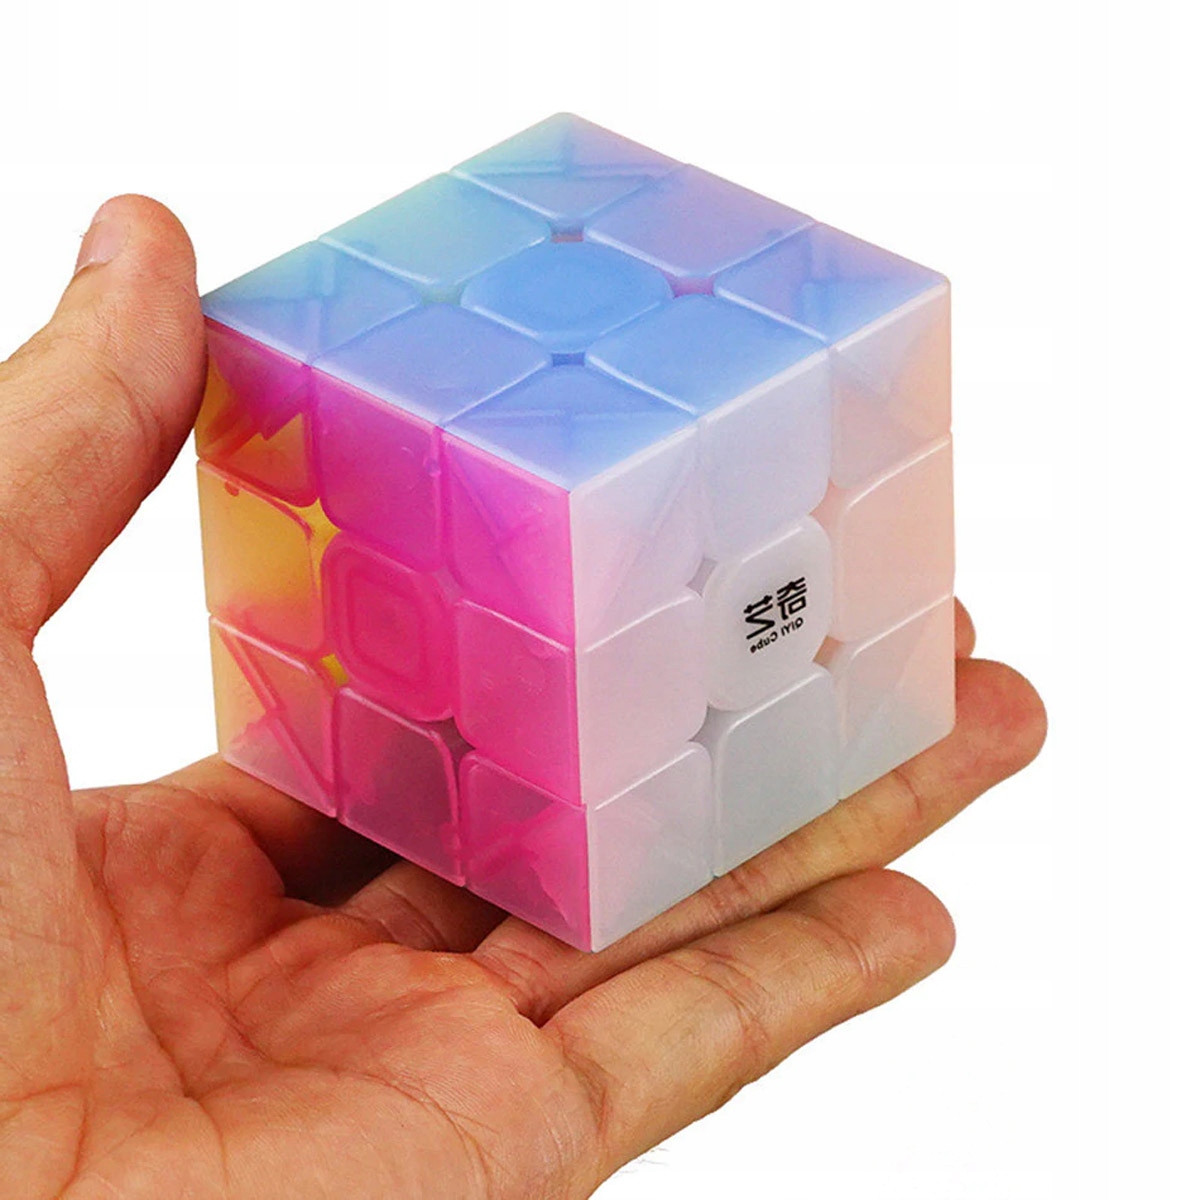 Jelly cube. QIYI Cube Jelly. Магический куб 3x3. Прозрачные кубики. Магический кубик головоломка.